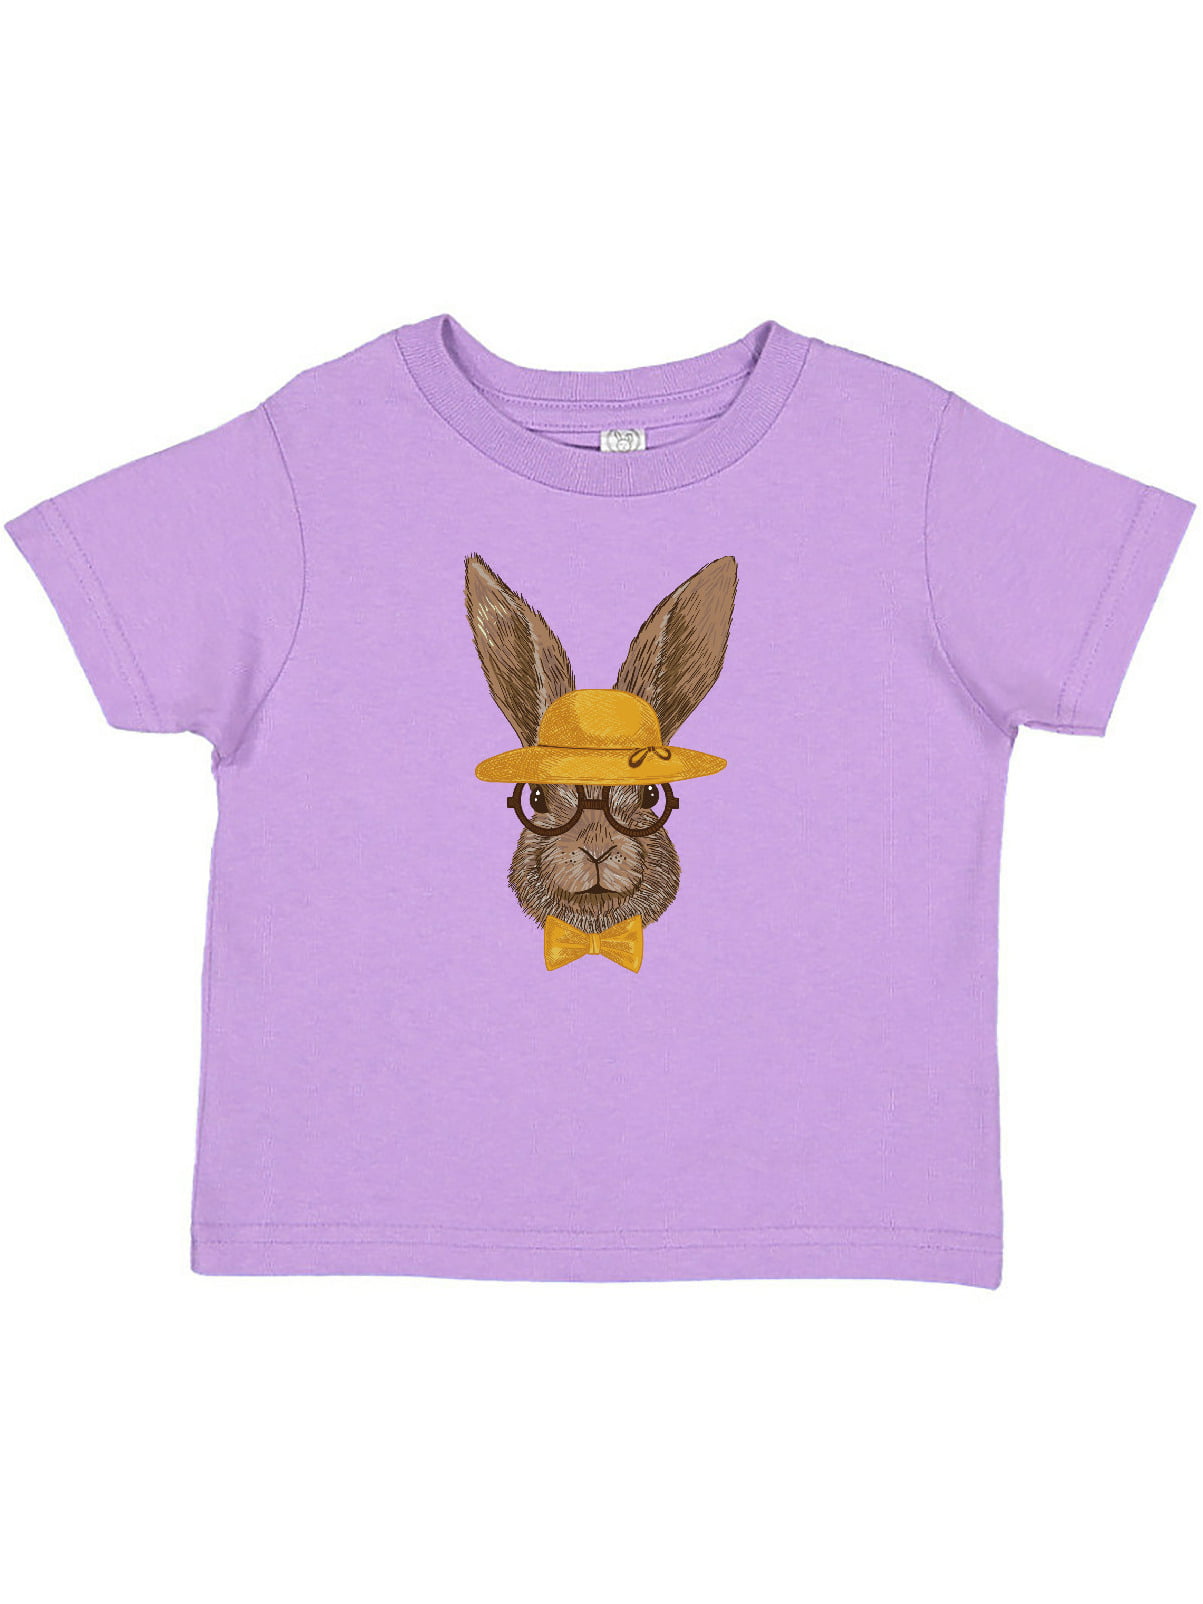 Hipster rabbit baby shirt